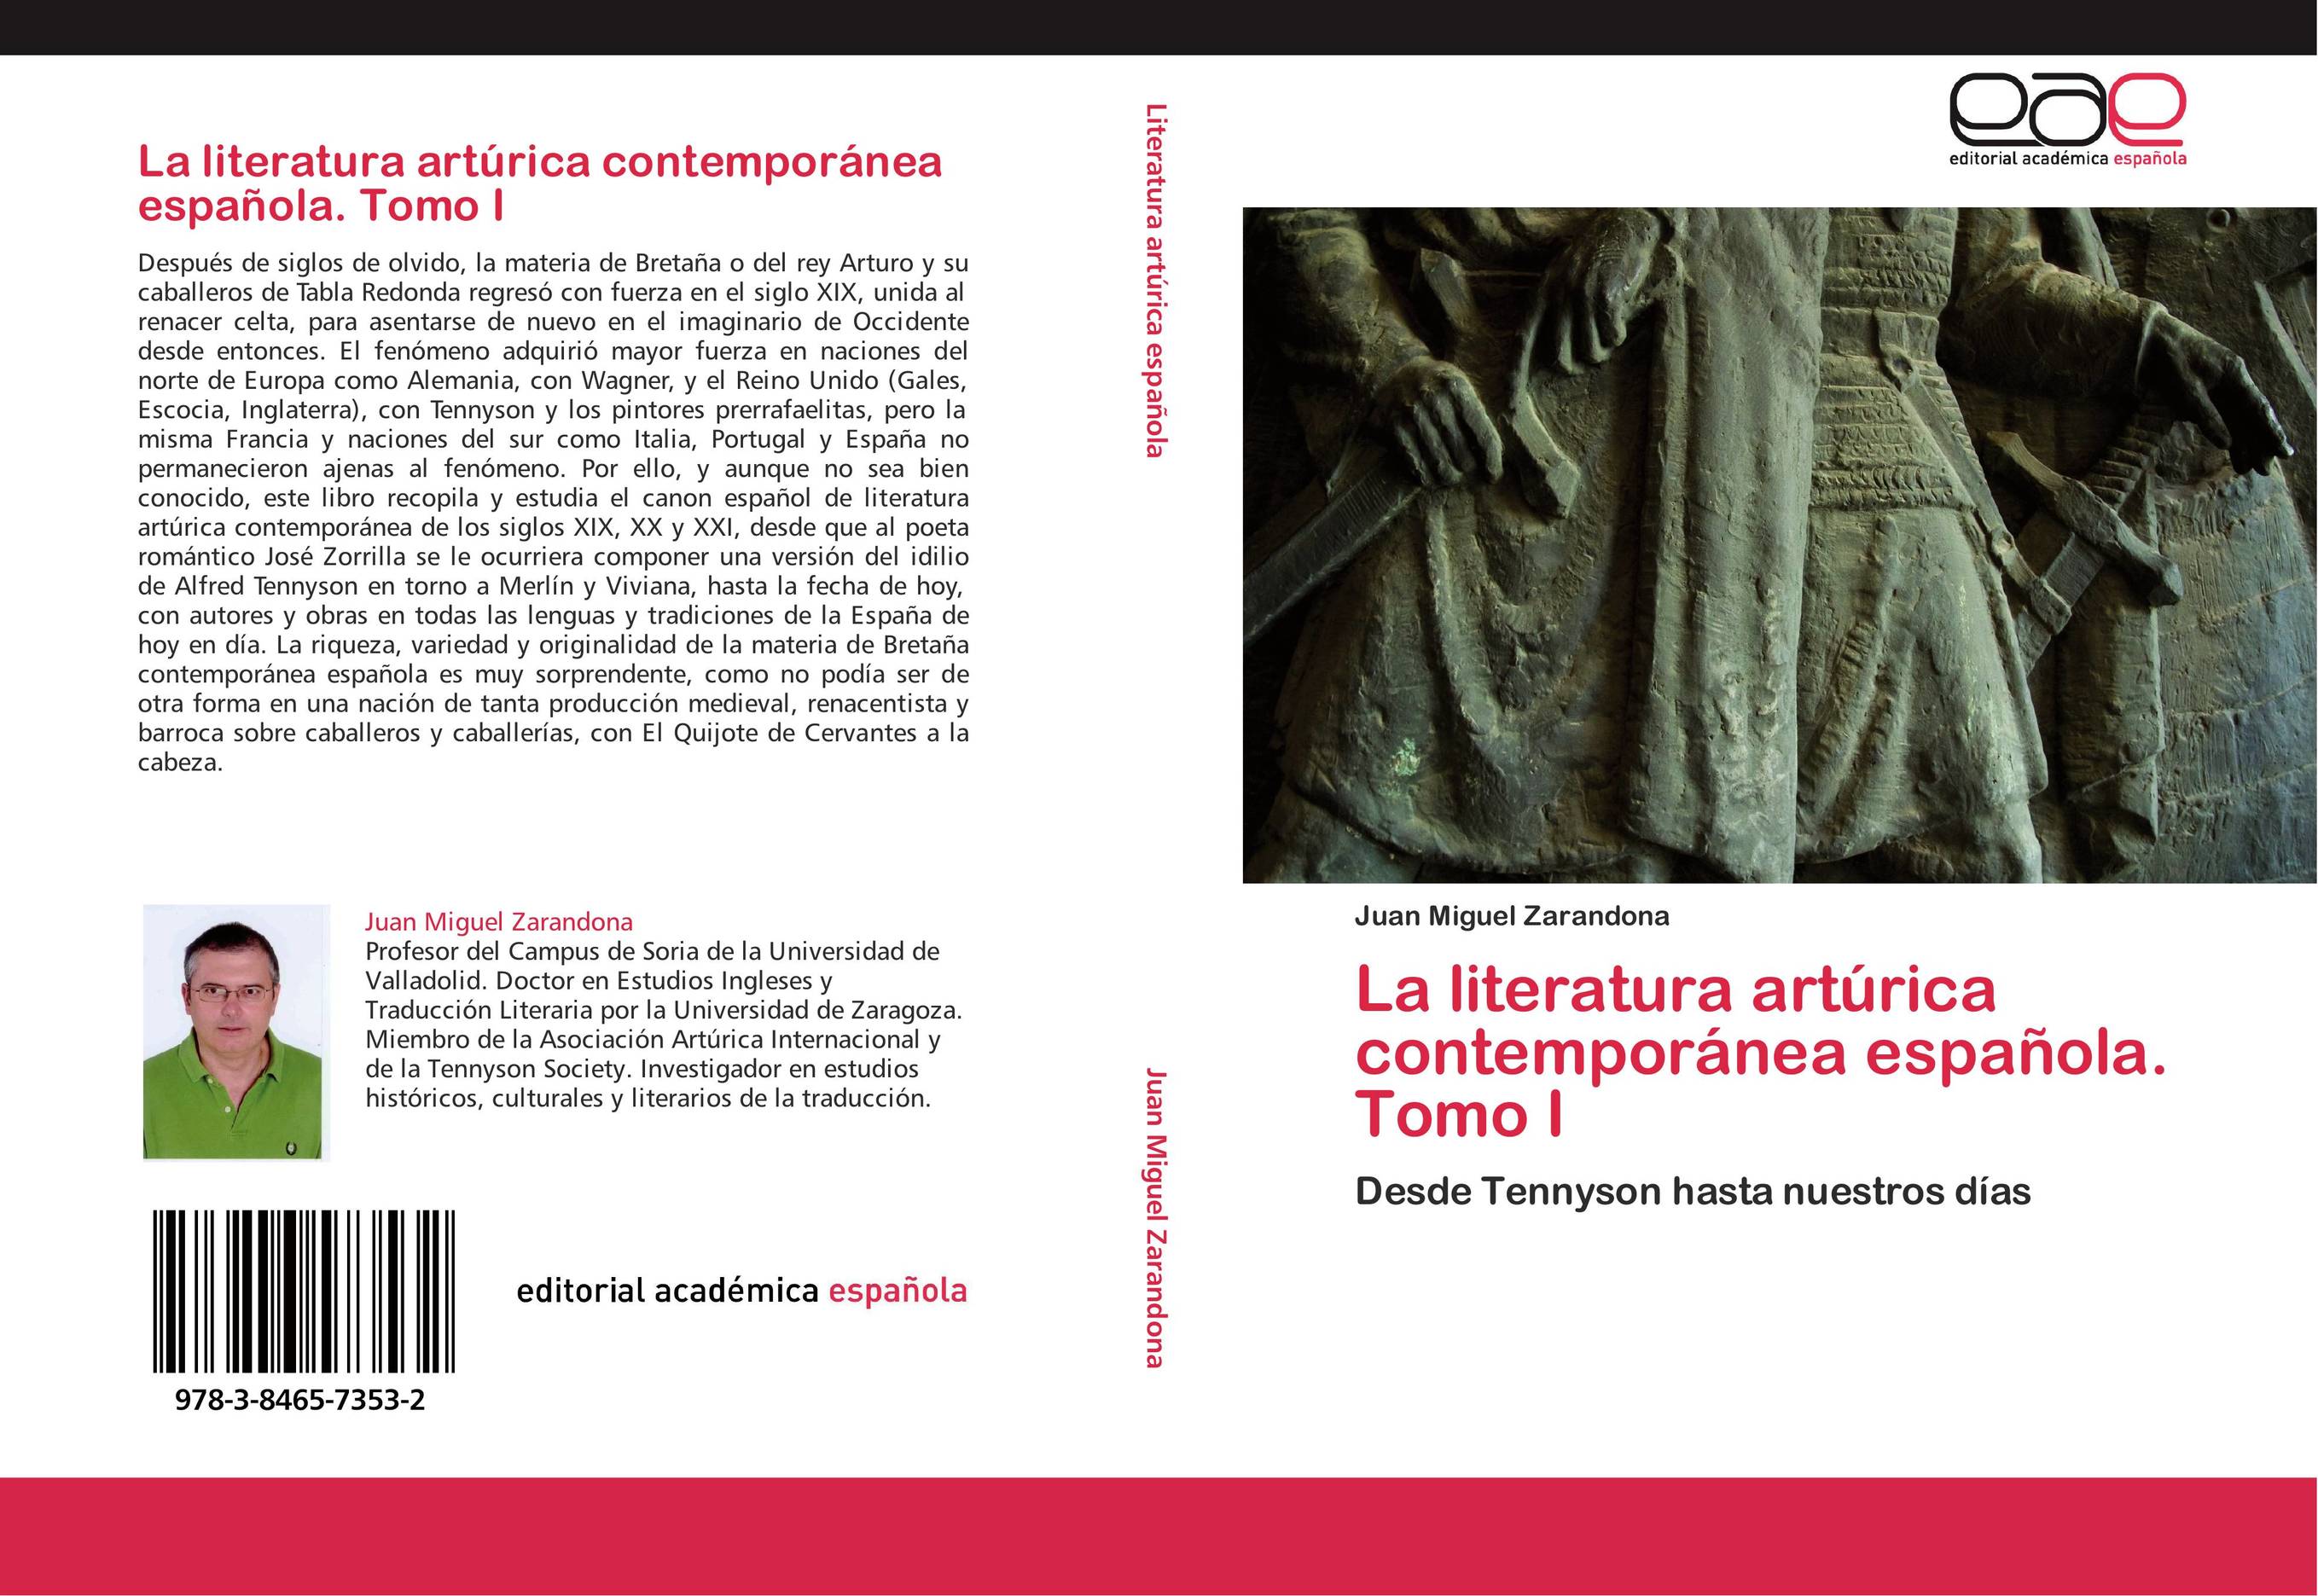 La literatura artúrica contemporánea española. Tomo I